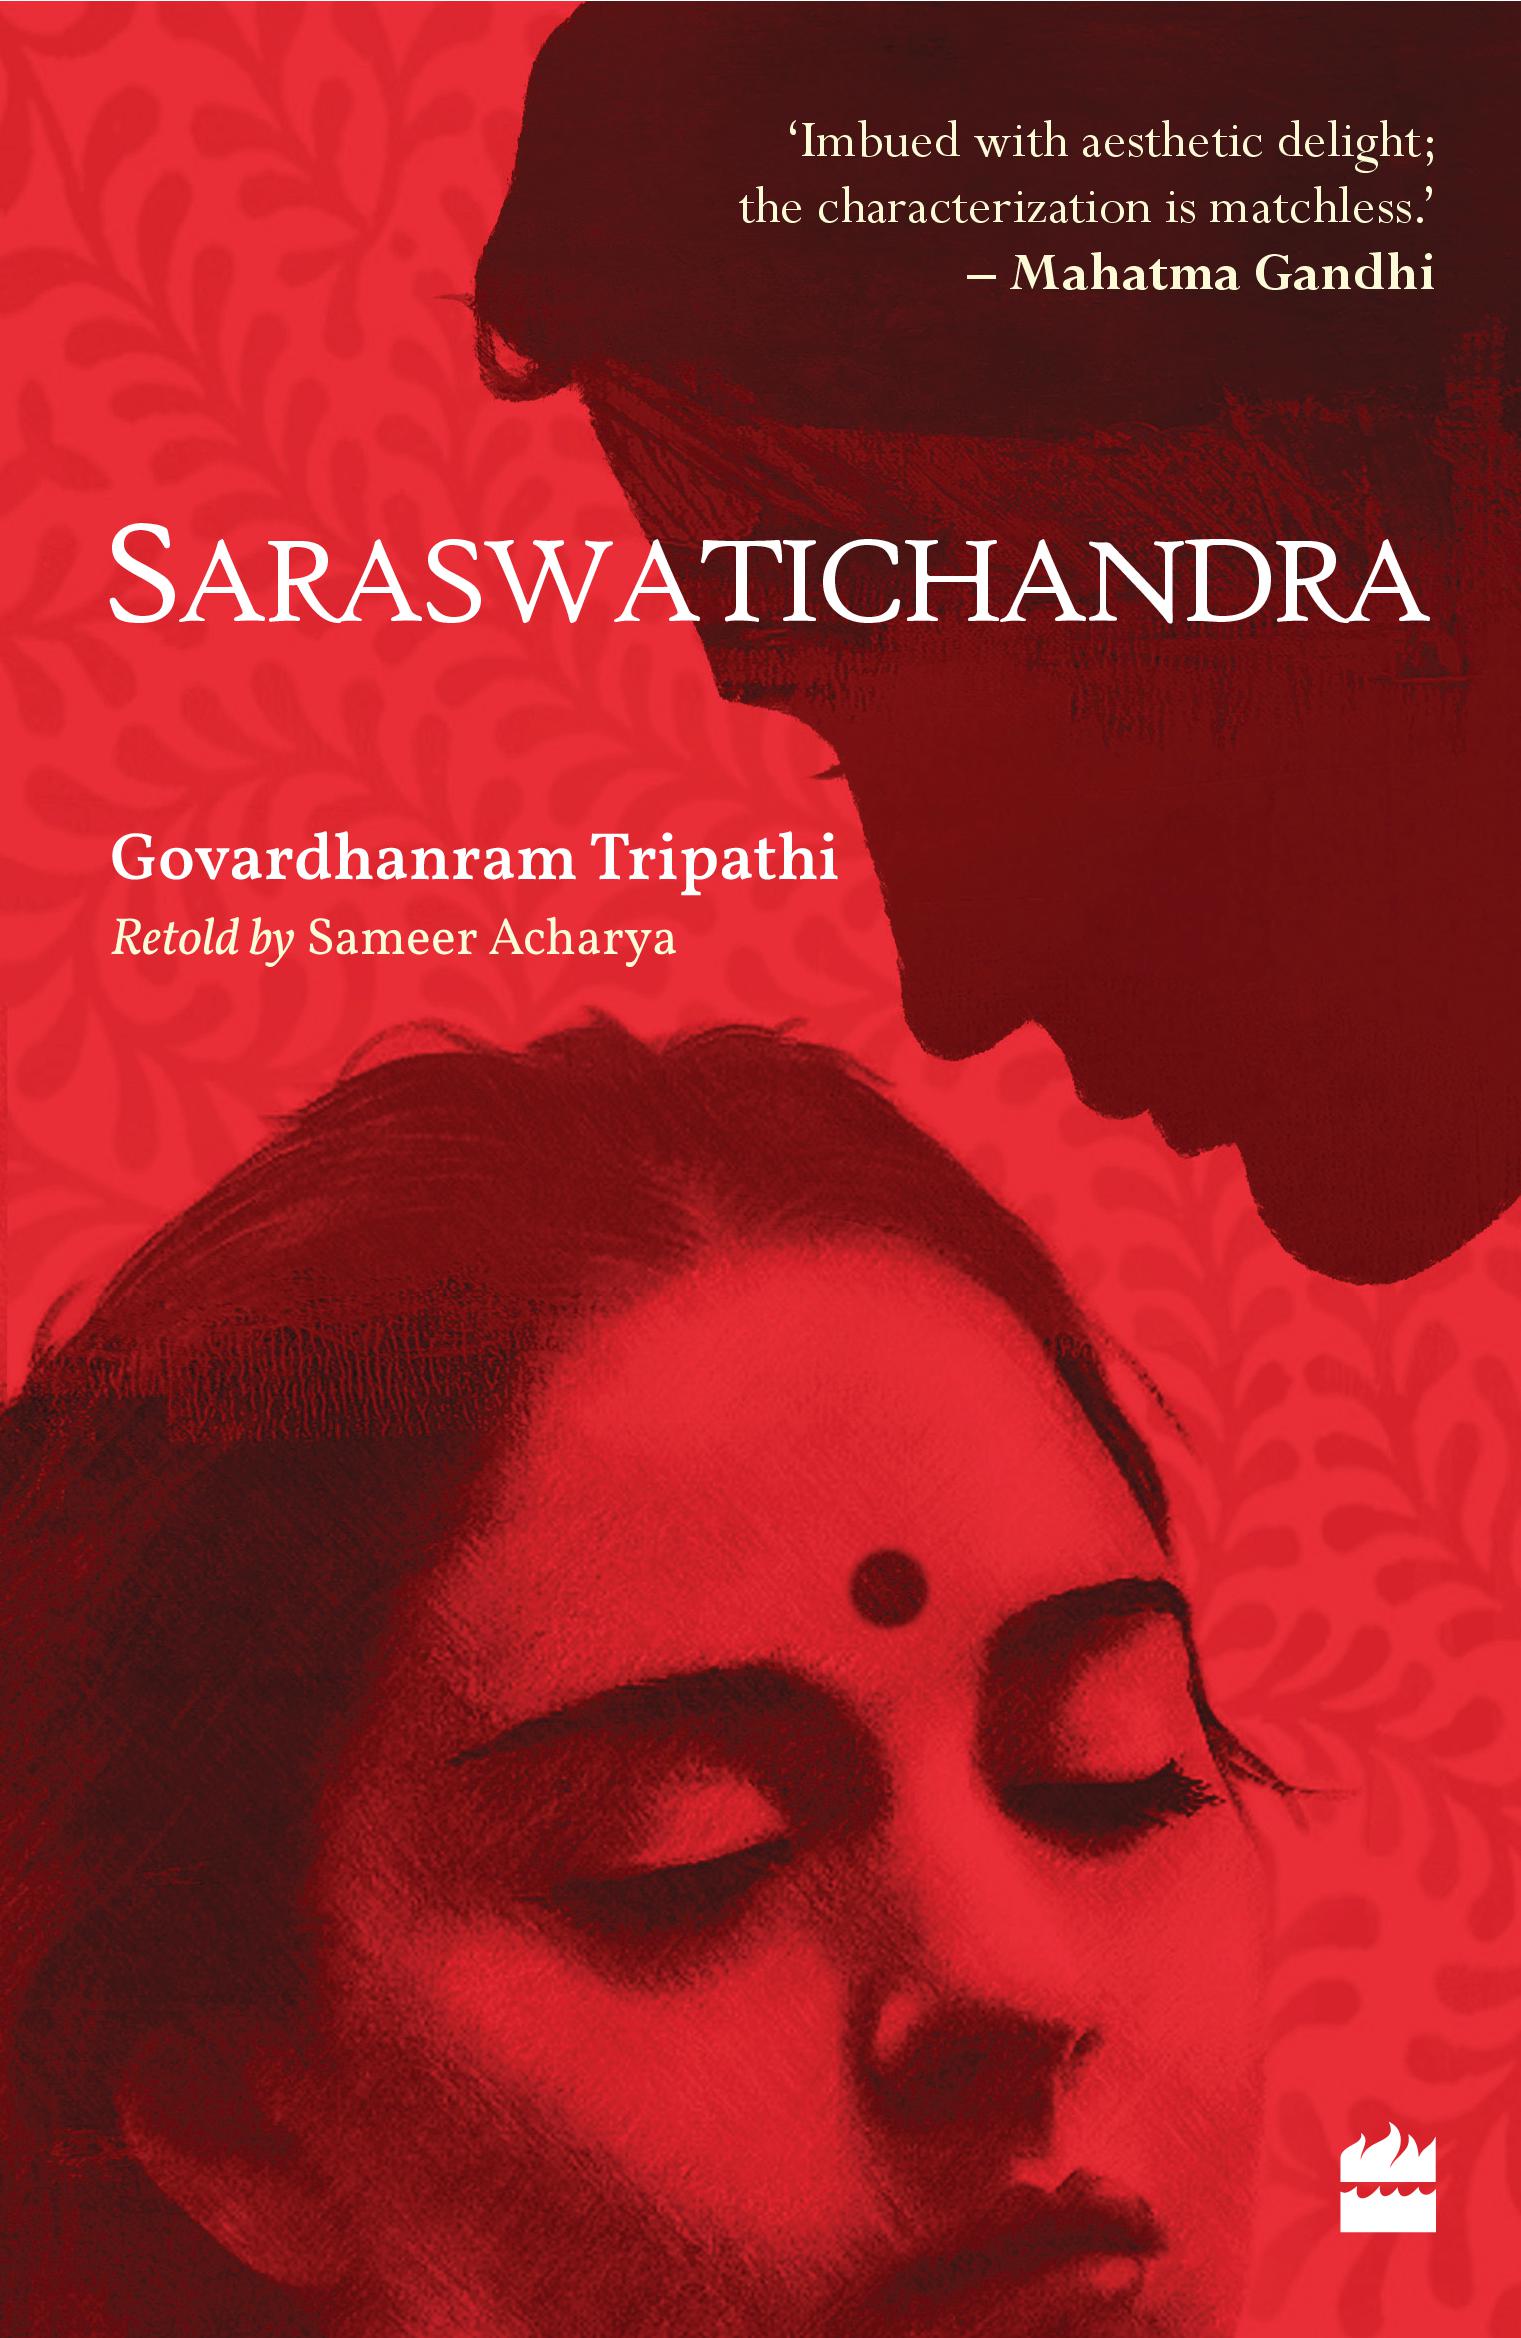 Saraswatichandra by Govardhanram Tripathi